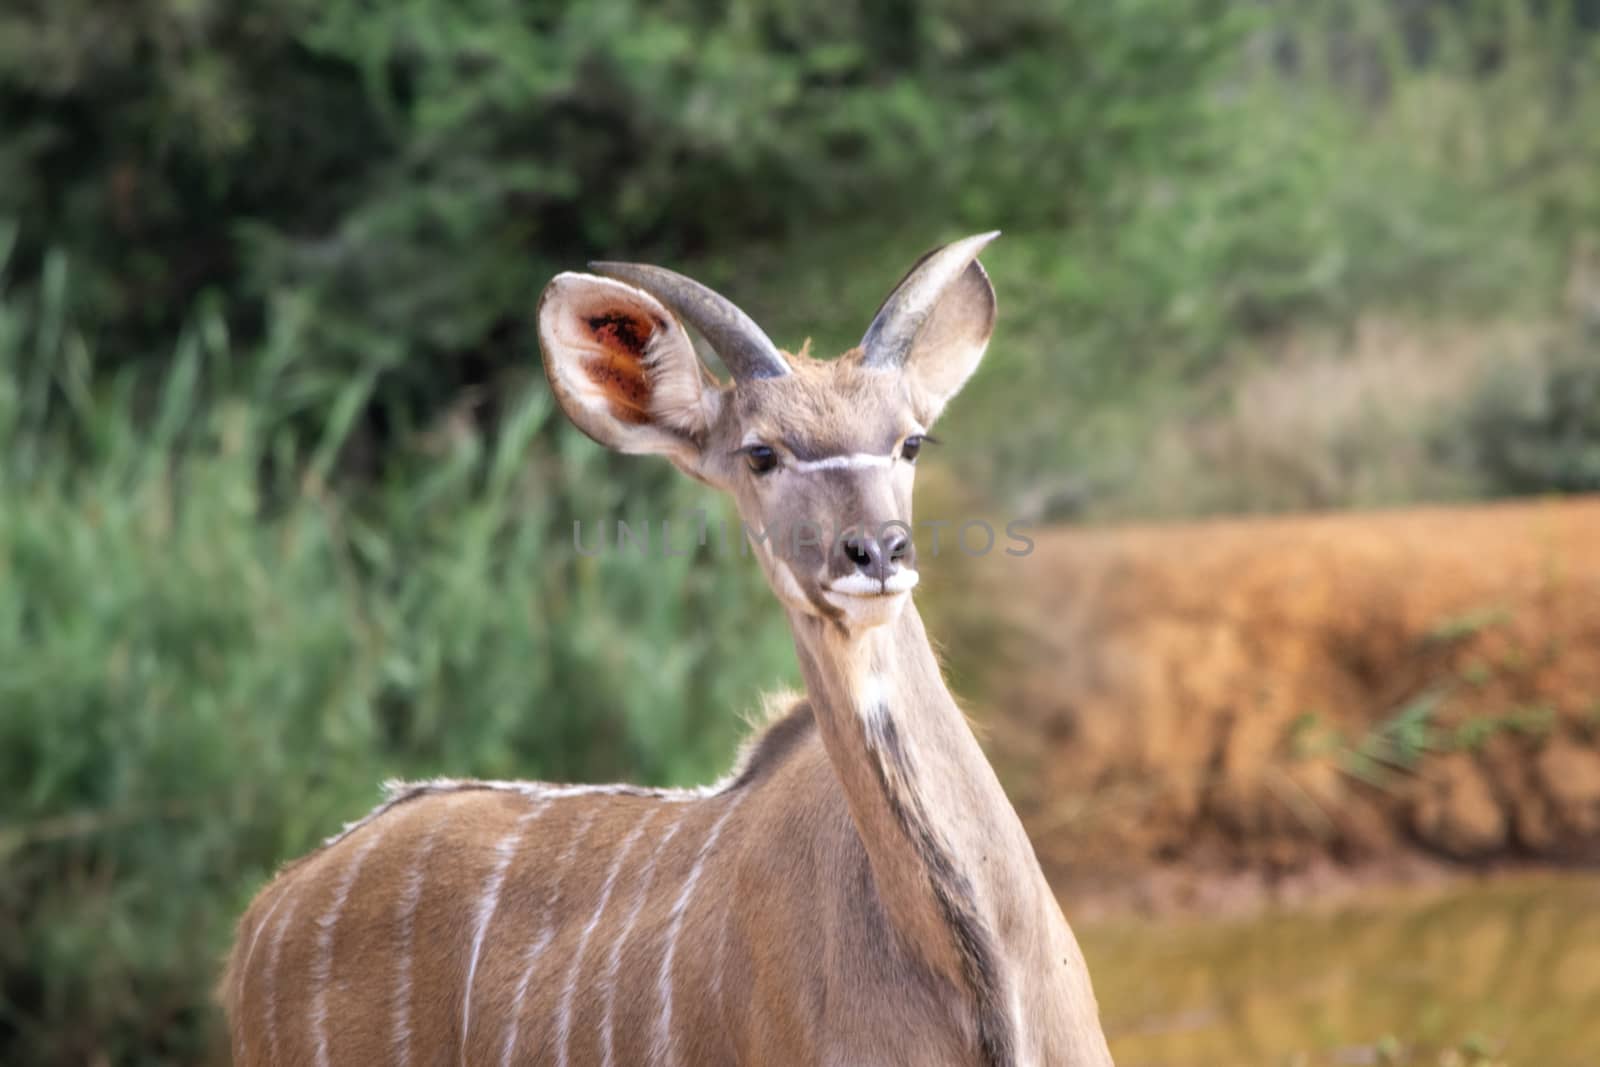 Juvenile Greater Kudu or Tragelaphus strepsiceros alerted in the African savannah. Safari animal.